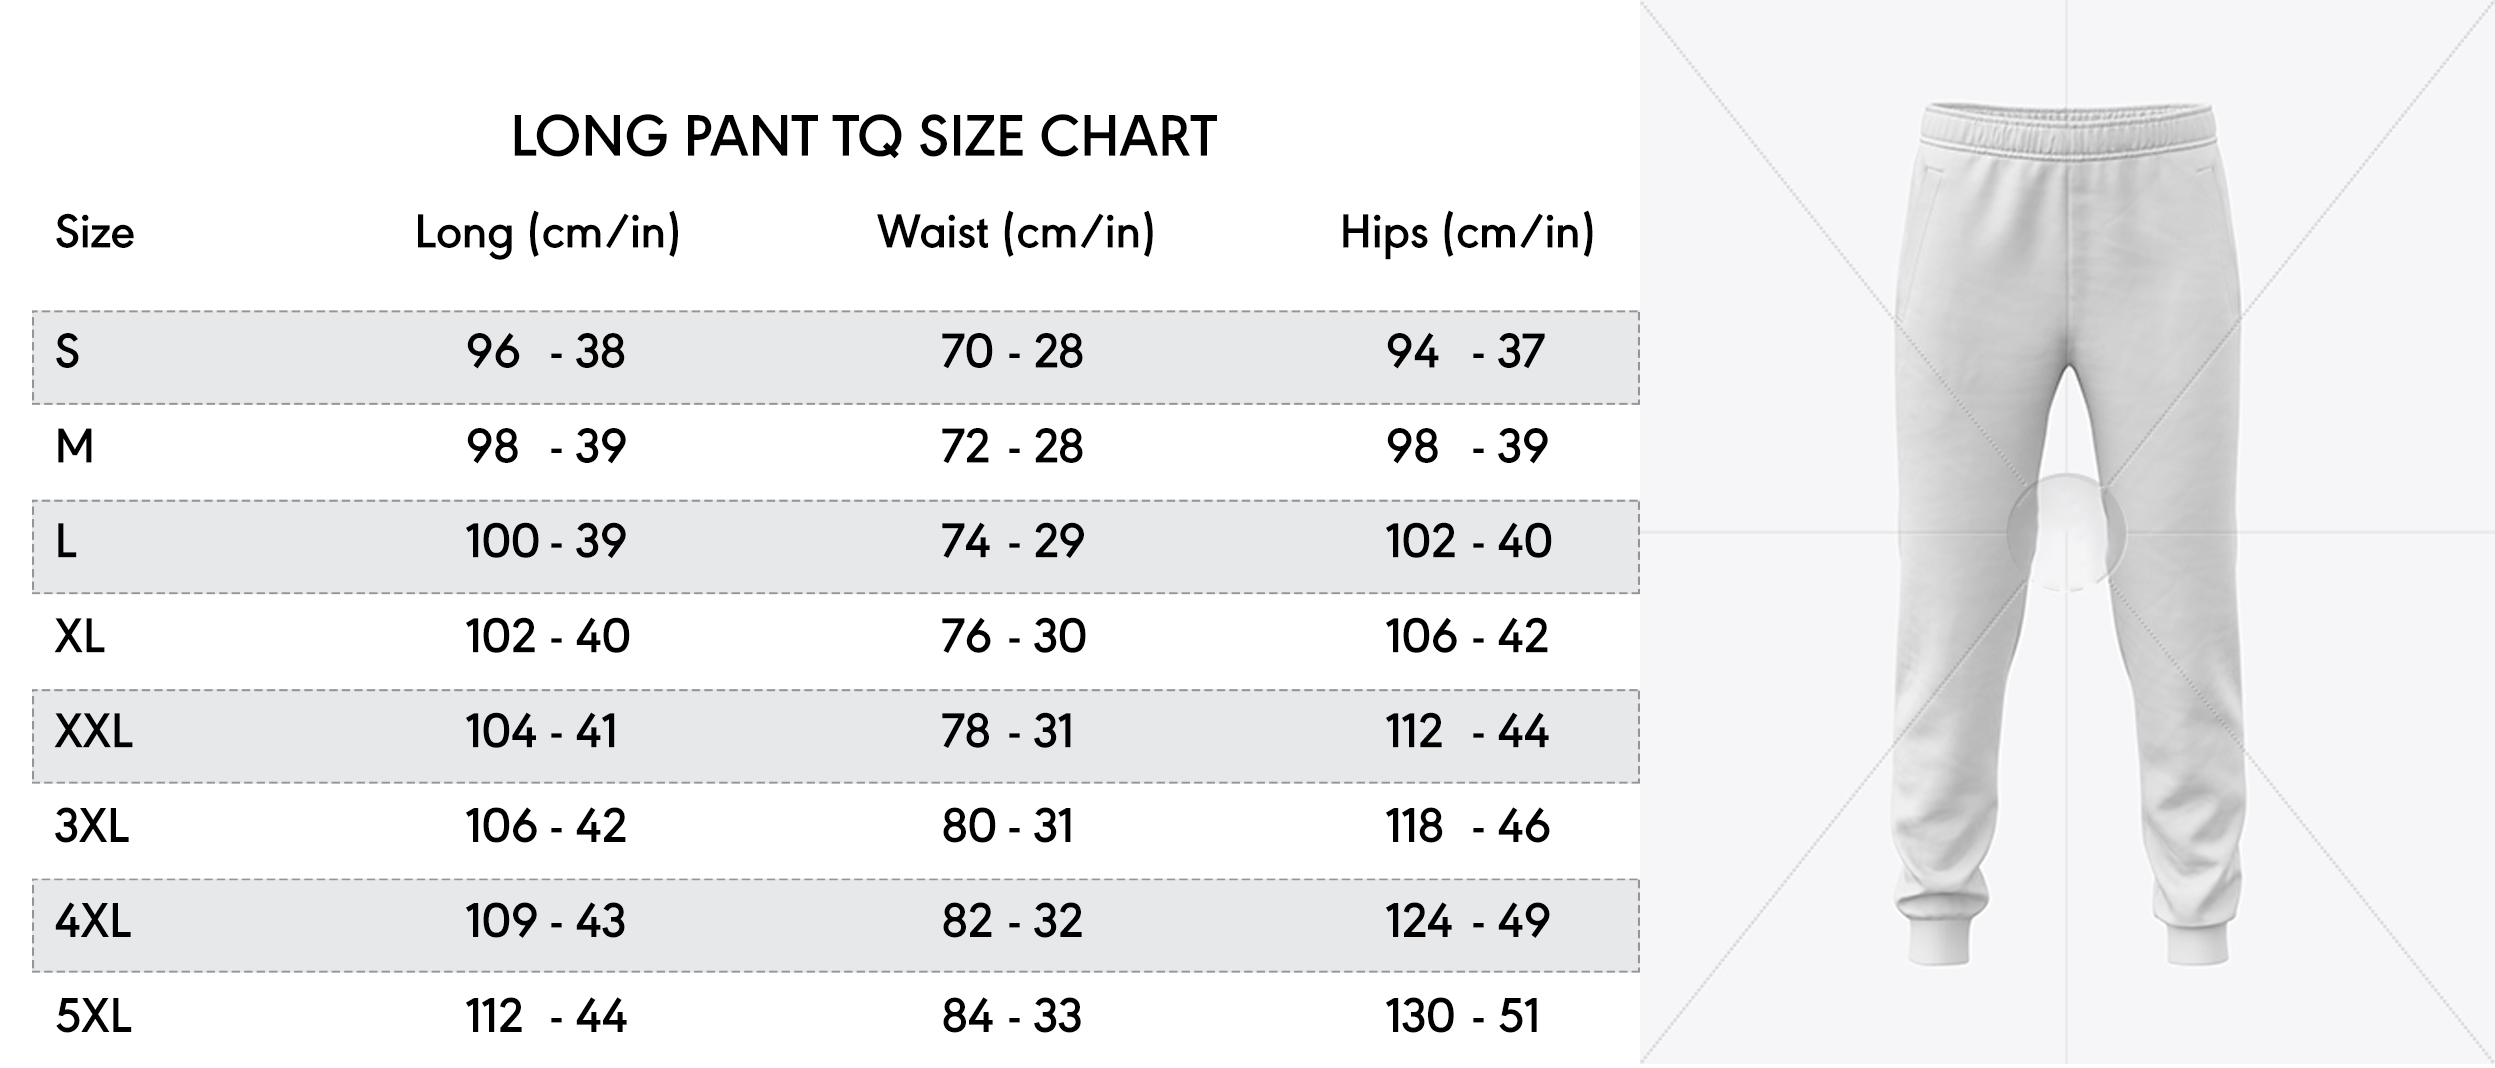 Adult Long Pant Size Charts